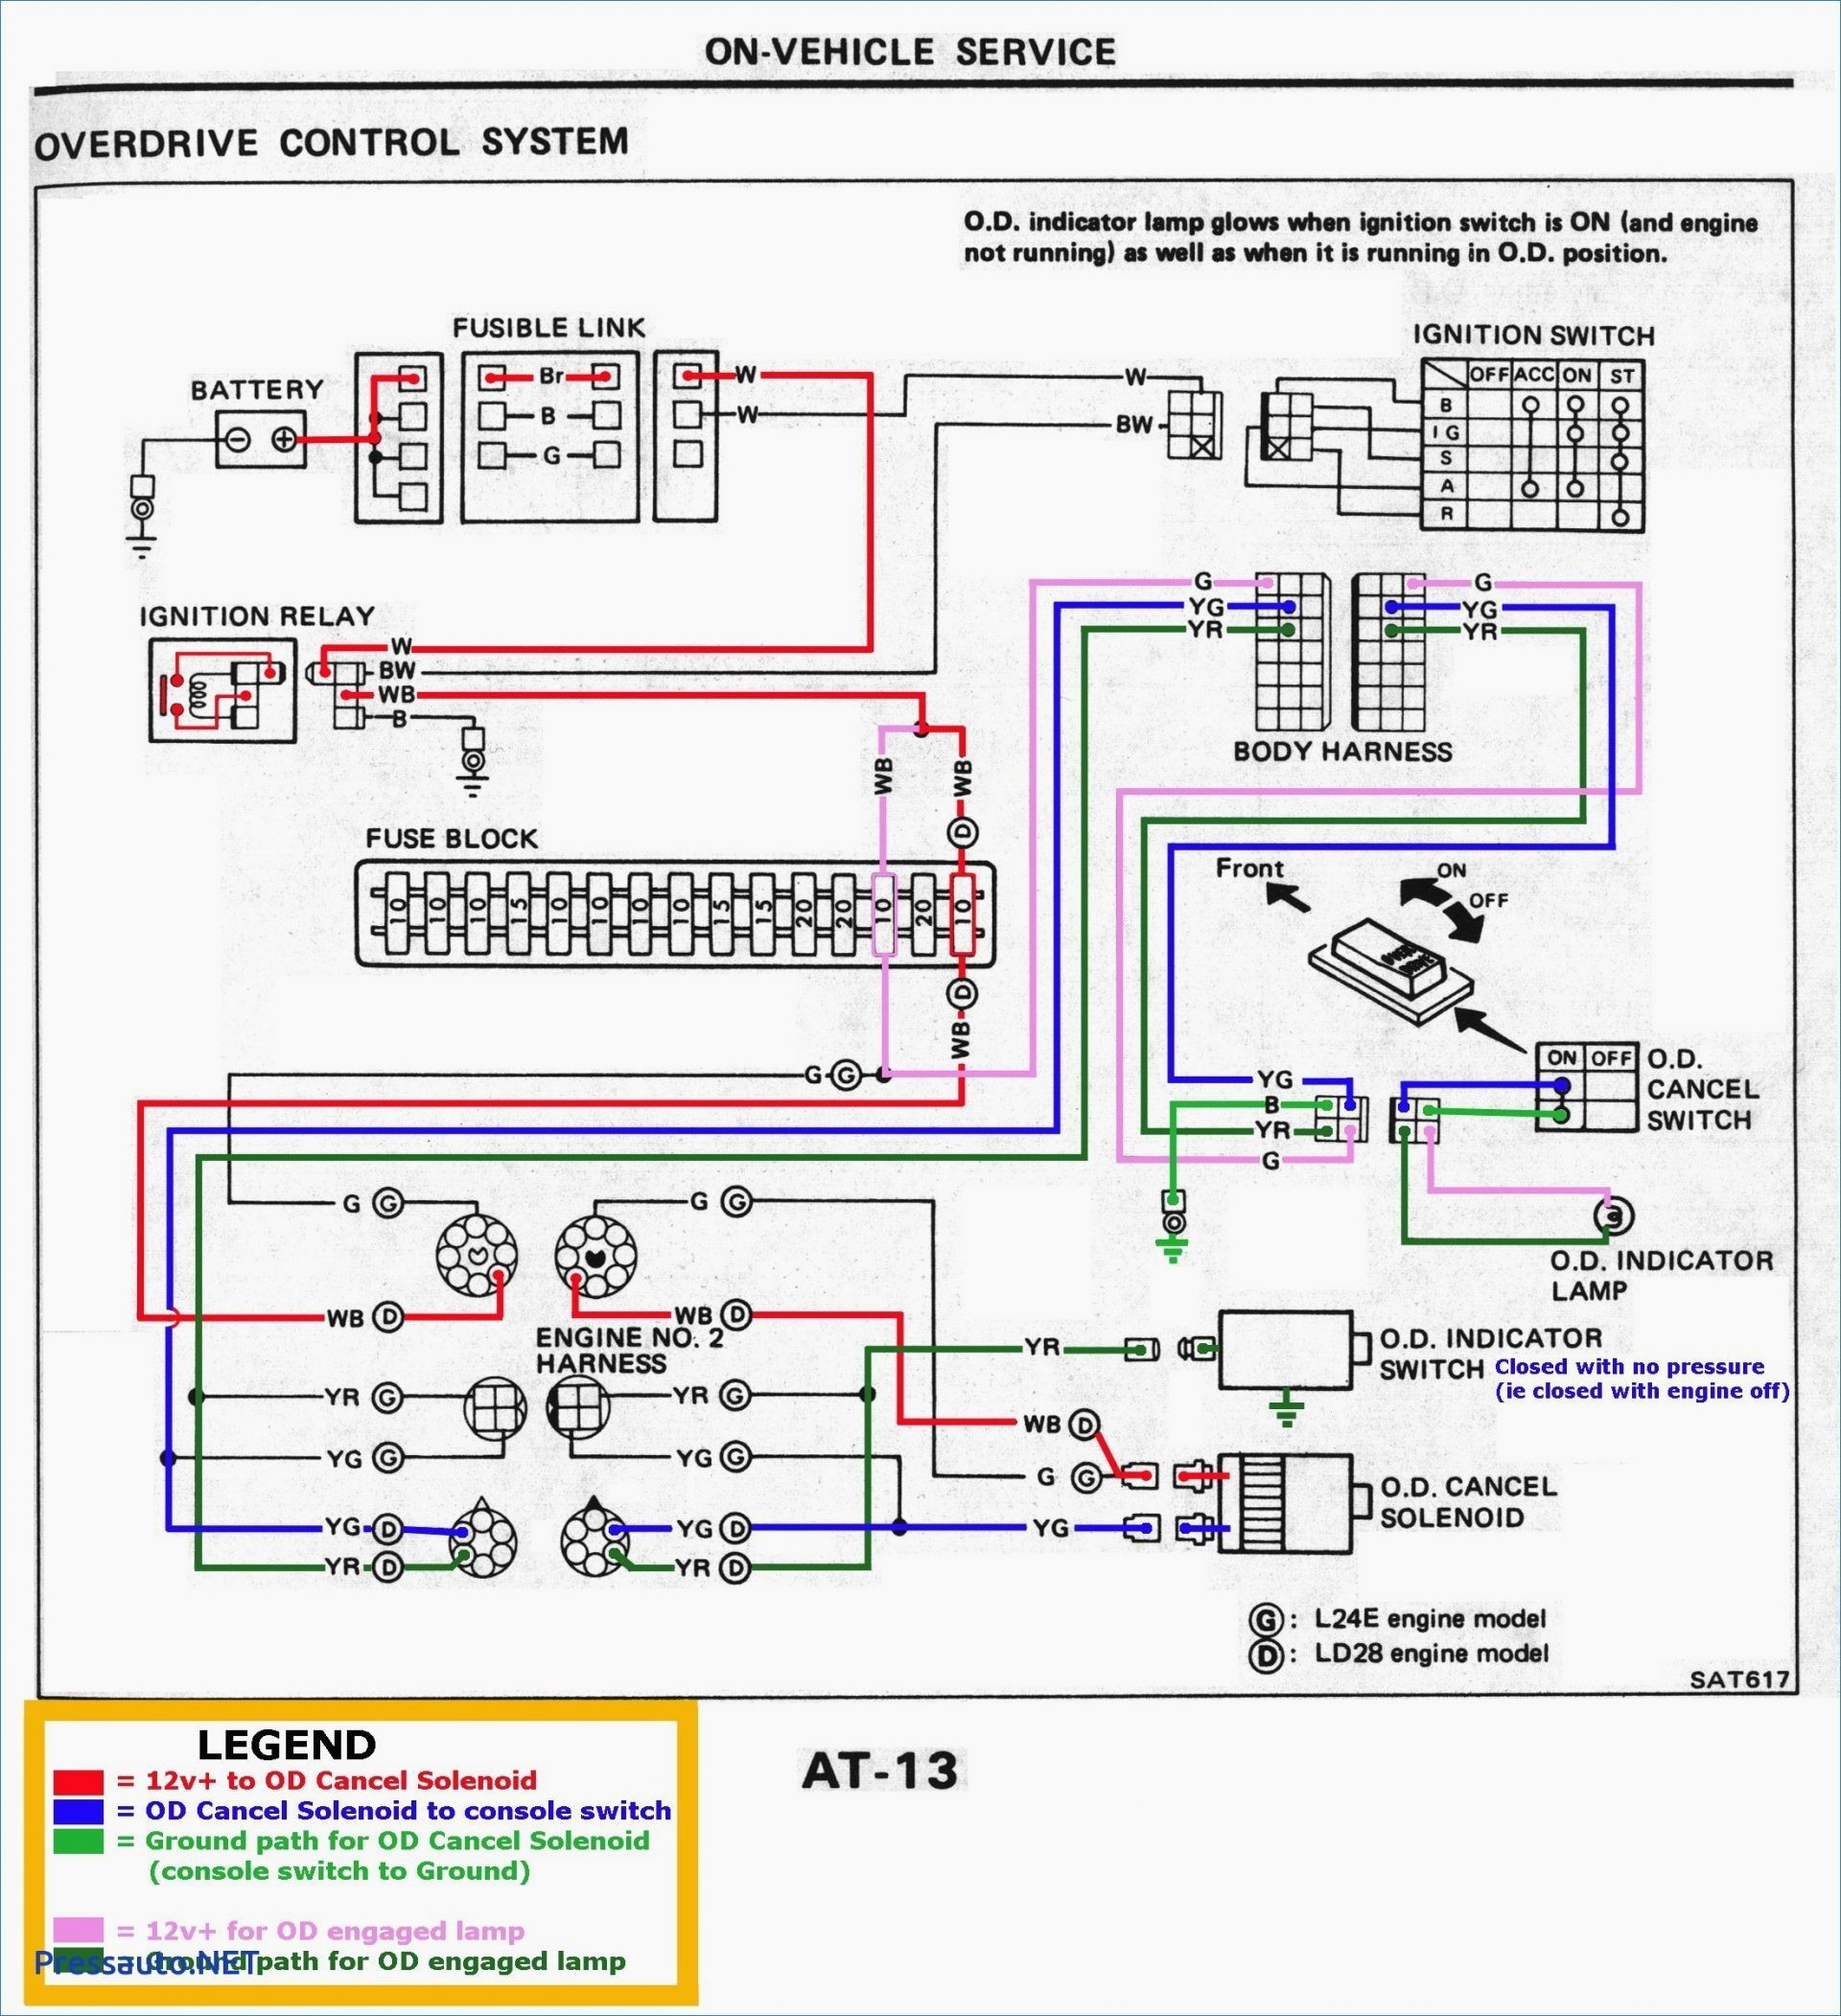 2008 F350 Tail Light Wiring Diagram â¦diagram Basedâ¦ Chevy Truck Tail Light Wiring Diagram